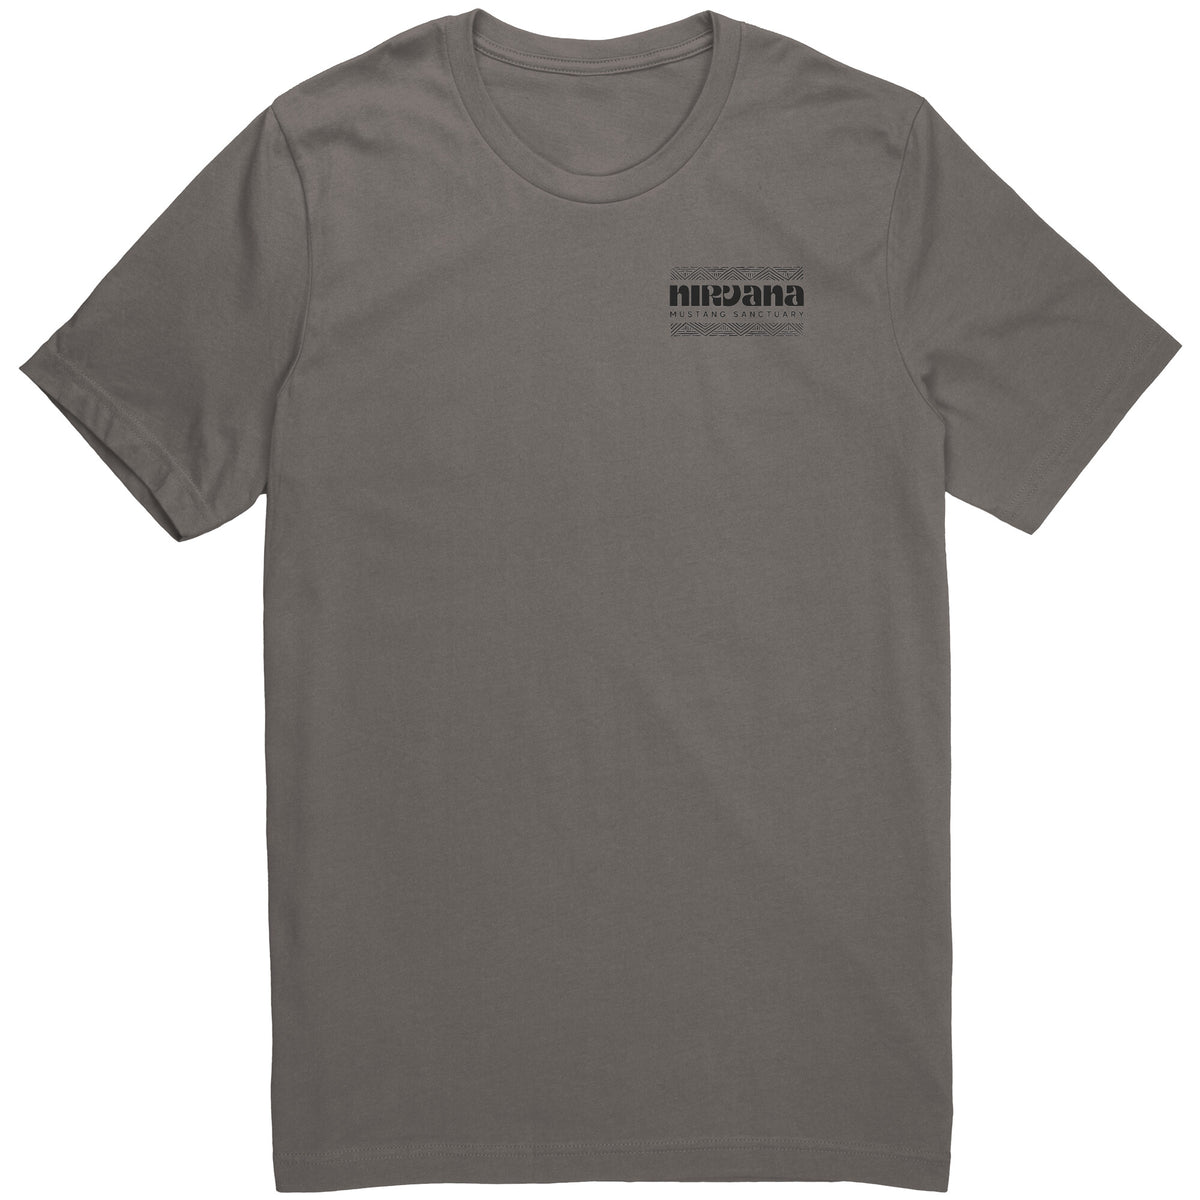 Mustang Proud T-Shirt – Nirvana Mustang Sanctuary